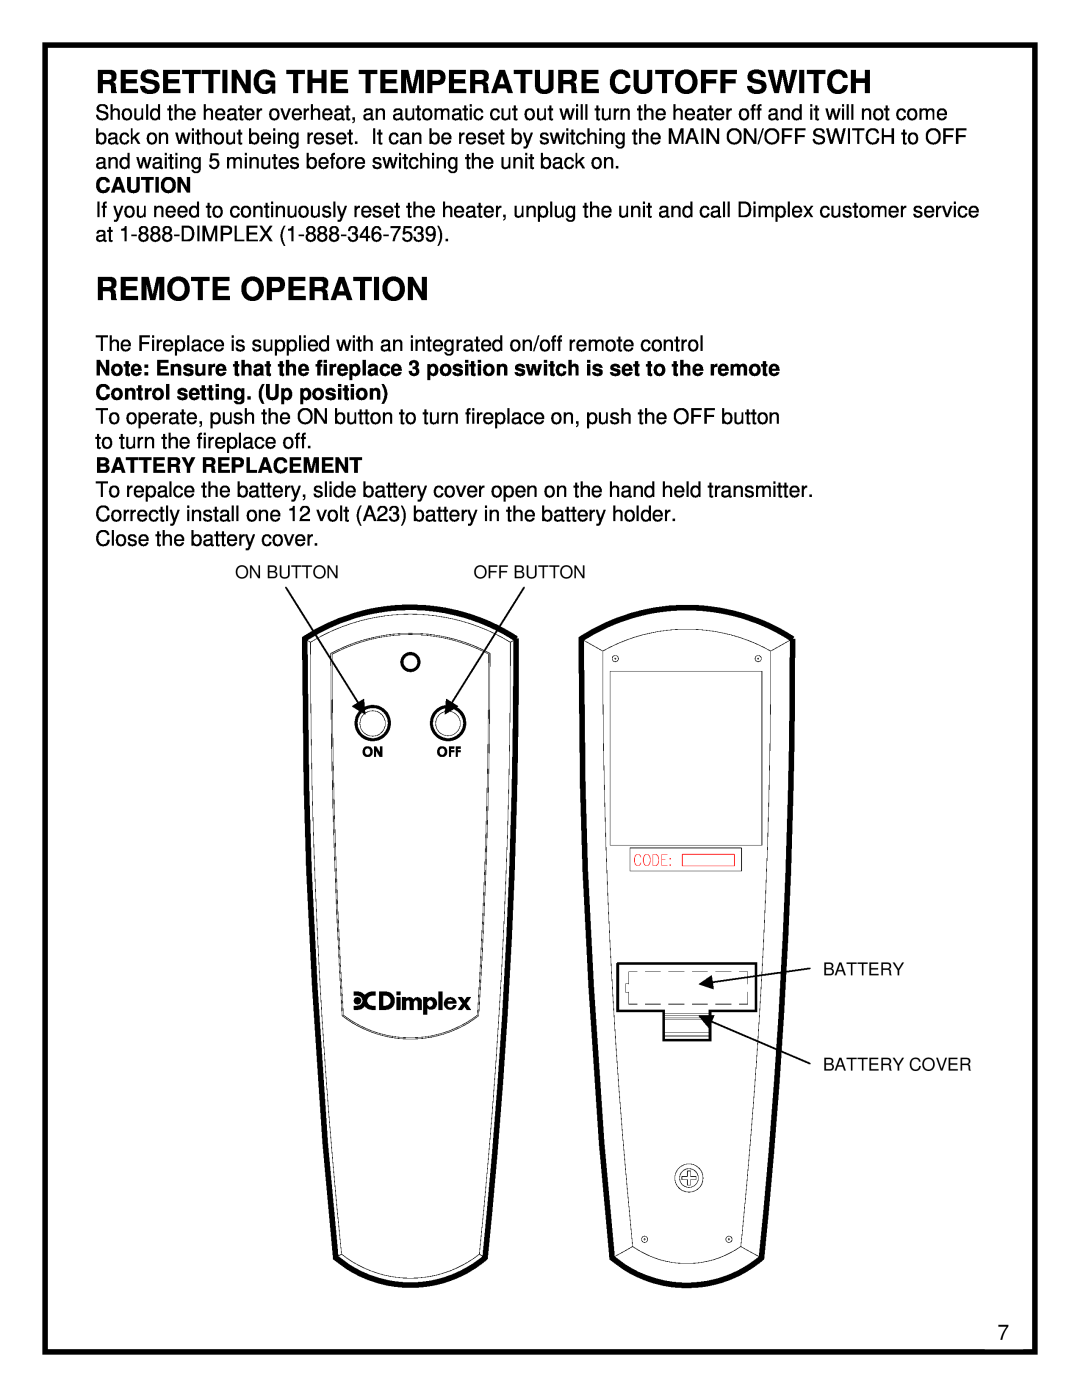 Dimplex EWM-COPPER, EWM-SS-BLK manual Resetting The Temperature Cutoff Switch, Remote Operation, Battery Replacement 